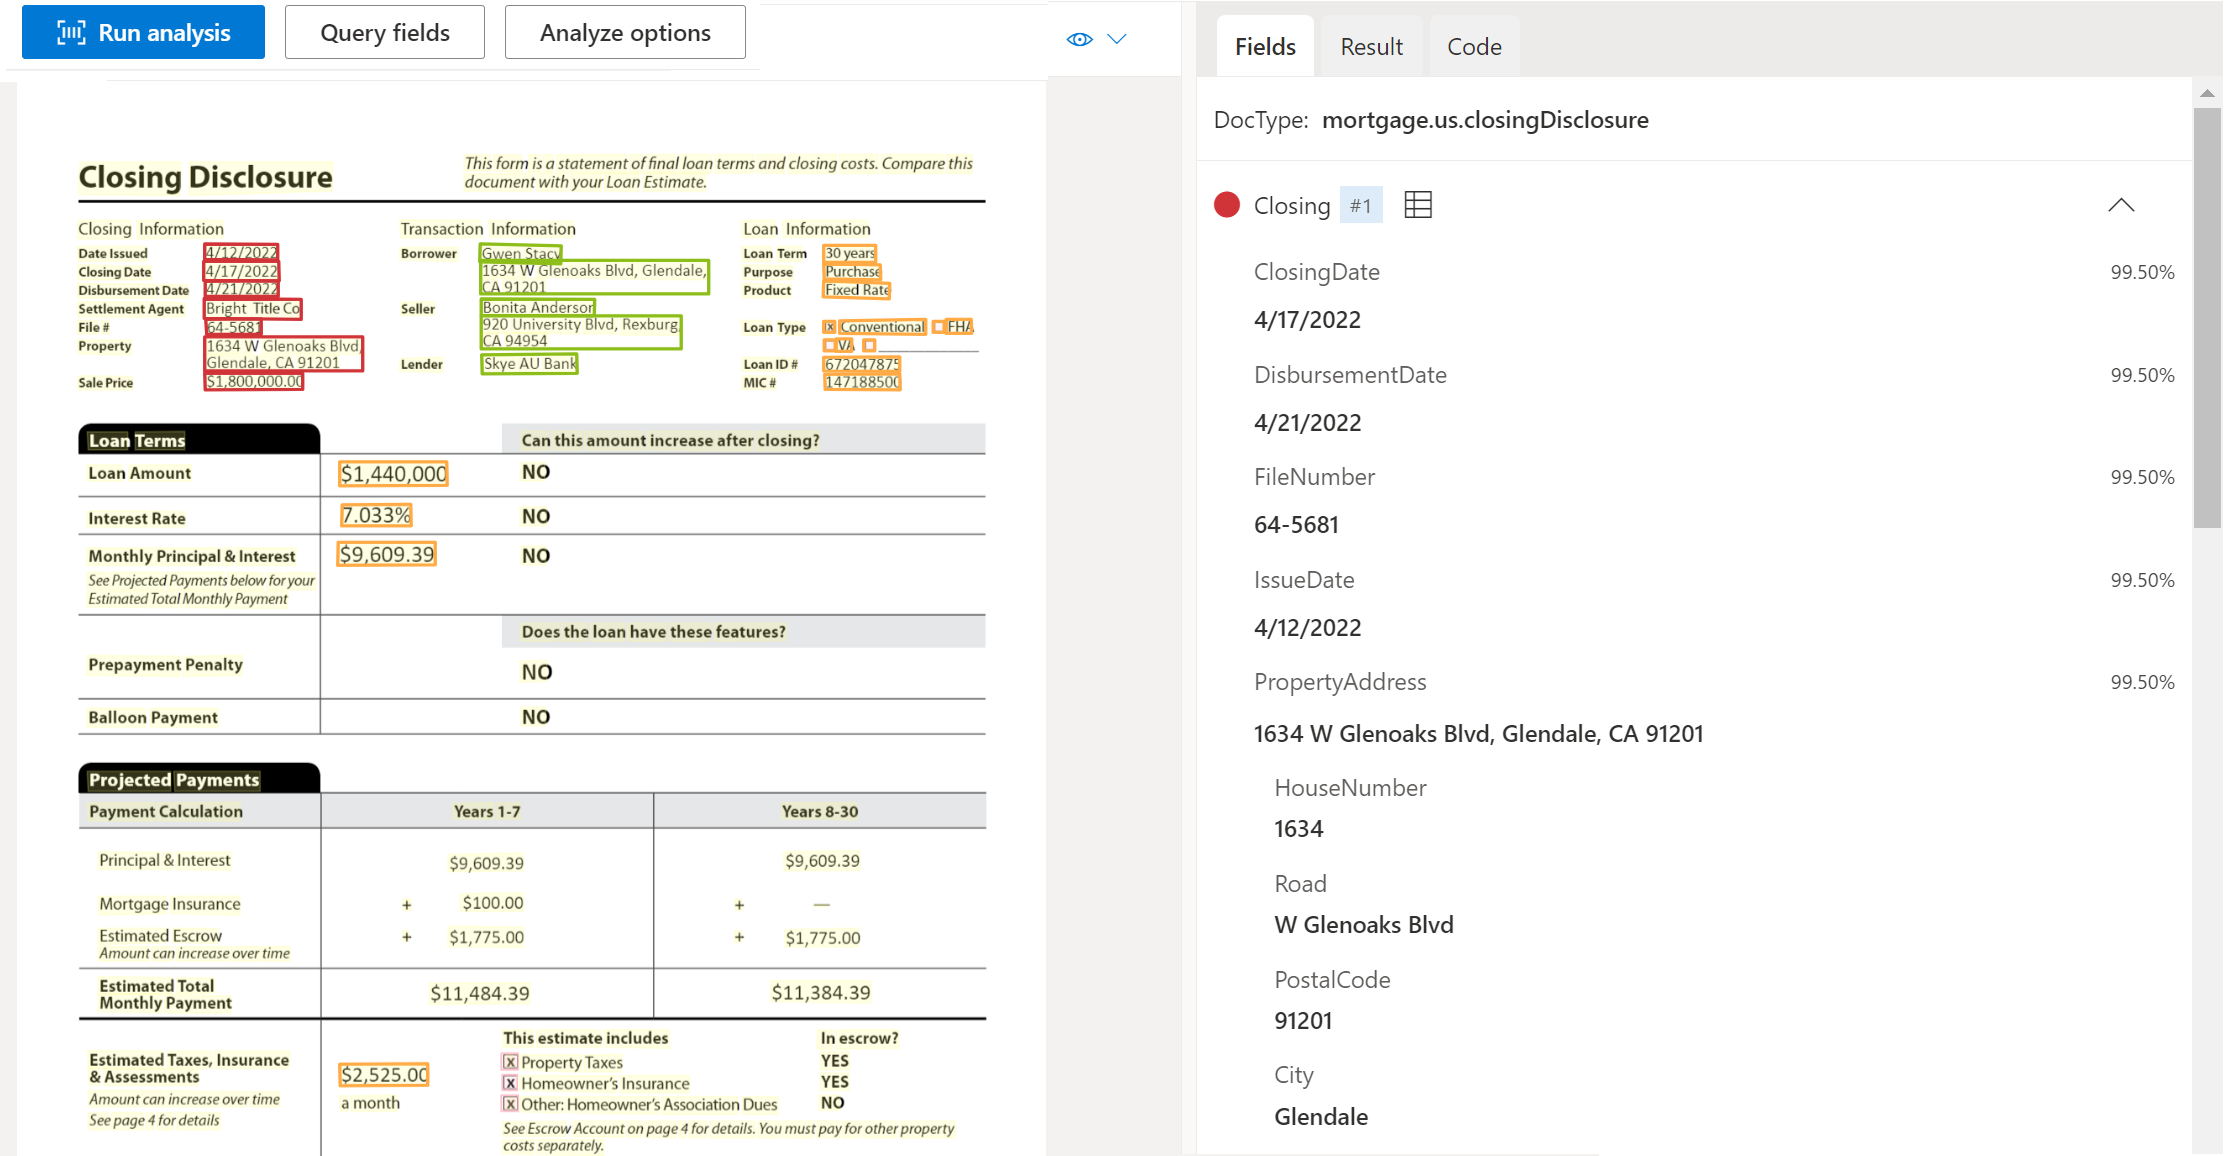 Screenshot of US Mortgage closing disclosure document model analysis using Document Intelligence Studio.